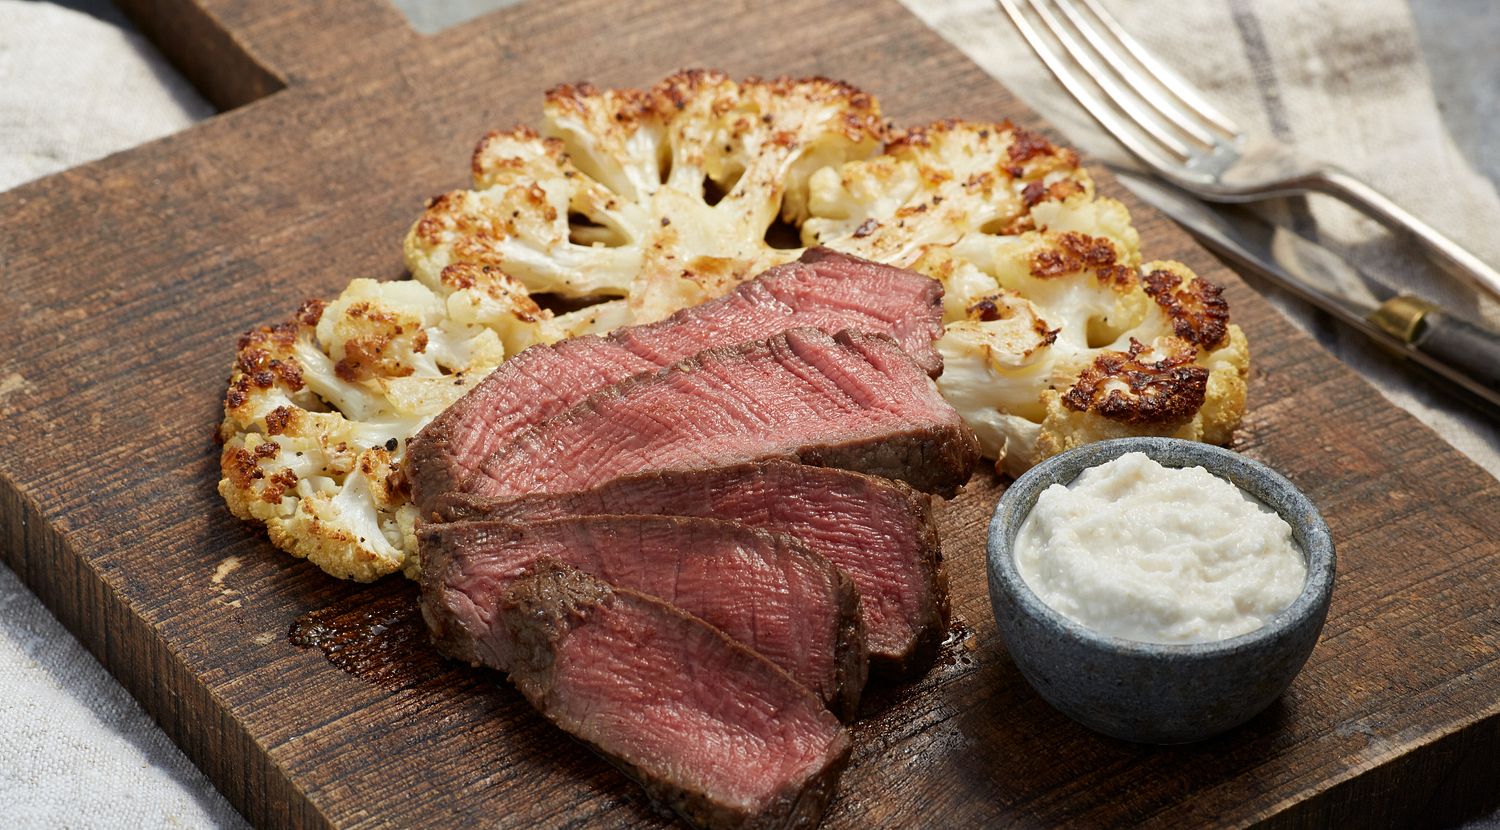 Beef Tenderloin with Roasted Cauliflower “Steak”